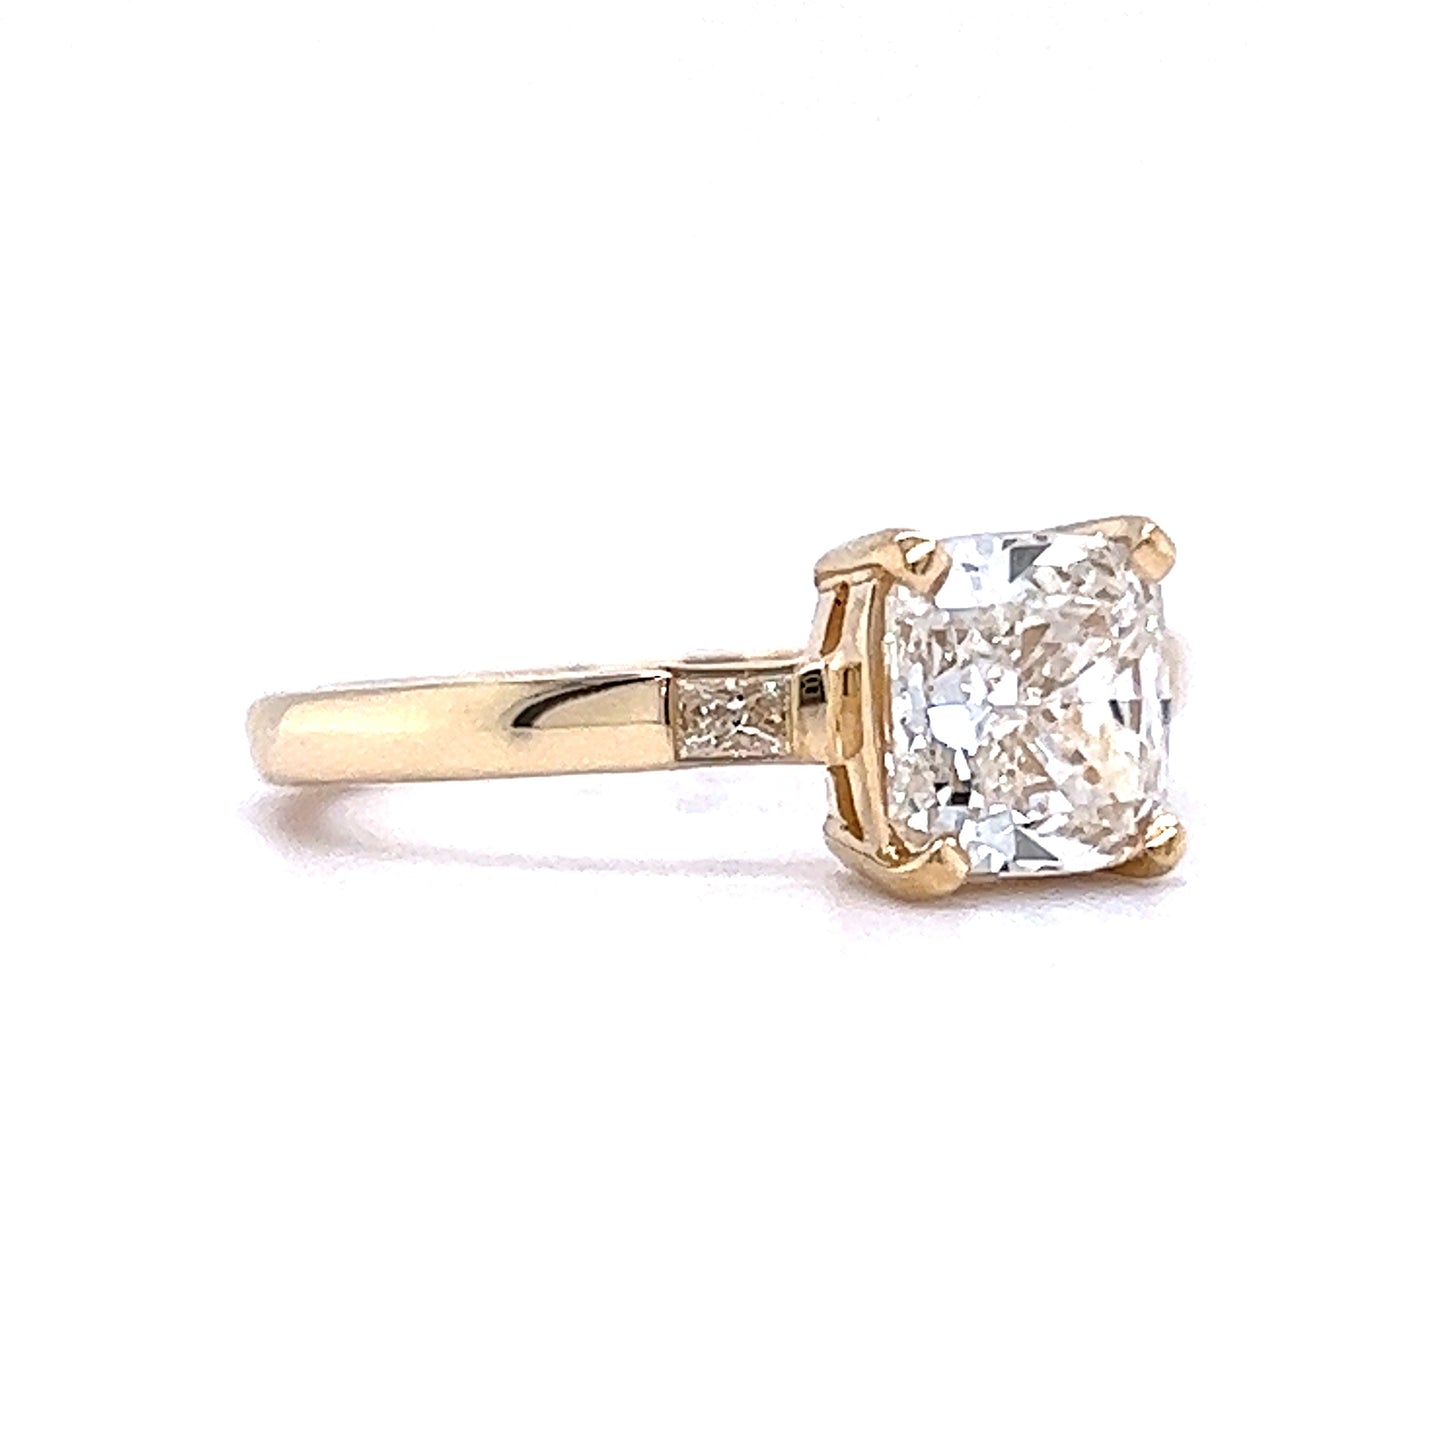 1.51 Cushion Cut Diamond Engagement Ring in 14k Yellow Gold